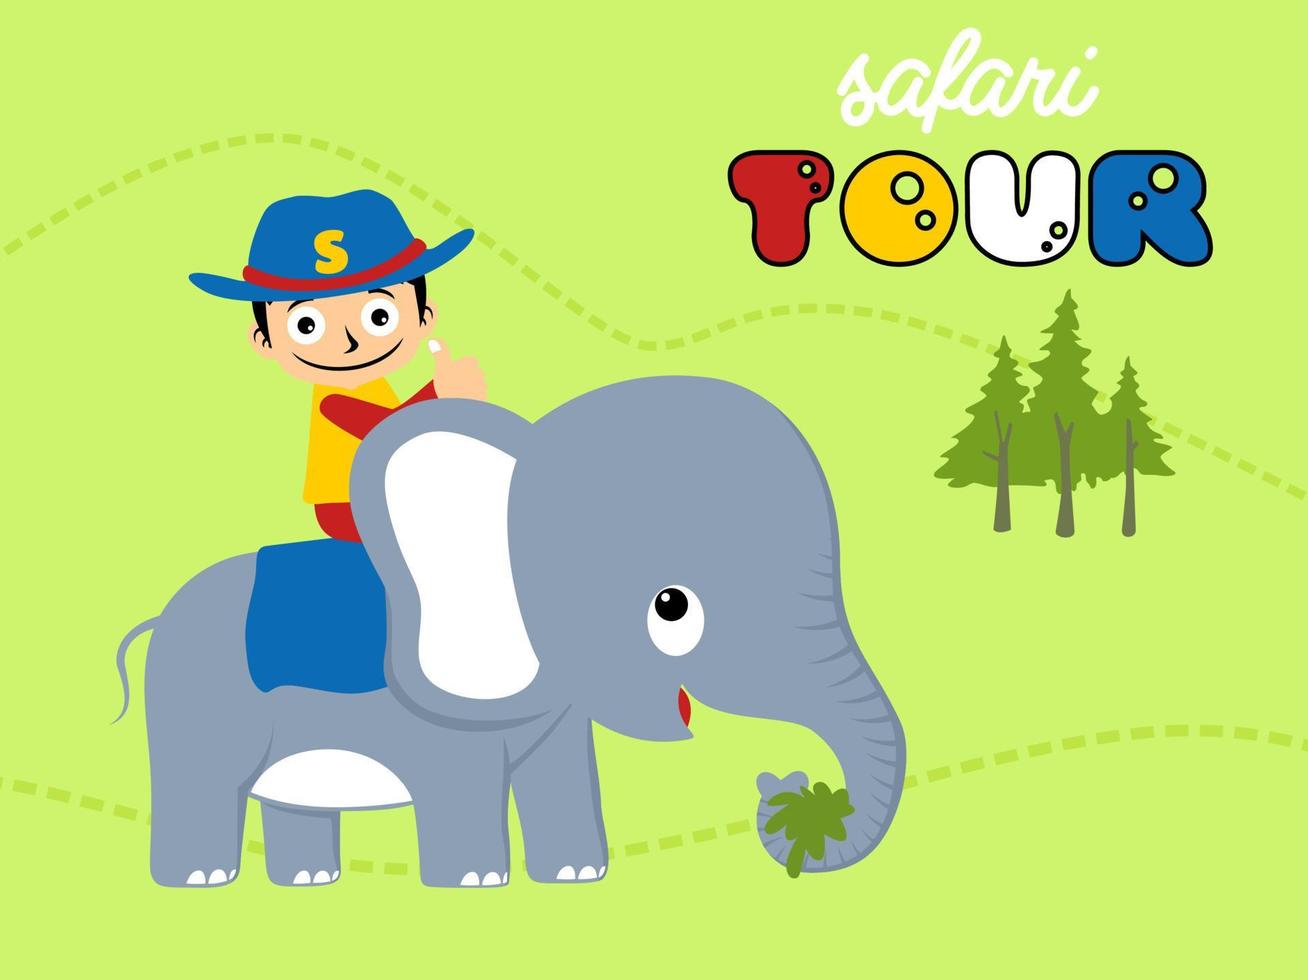 vector illustration of cartoon boy wearing cowboy cap riding elephant, safari tour element